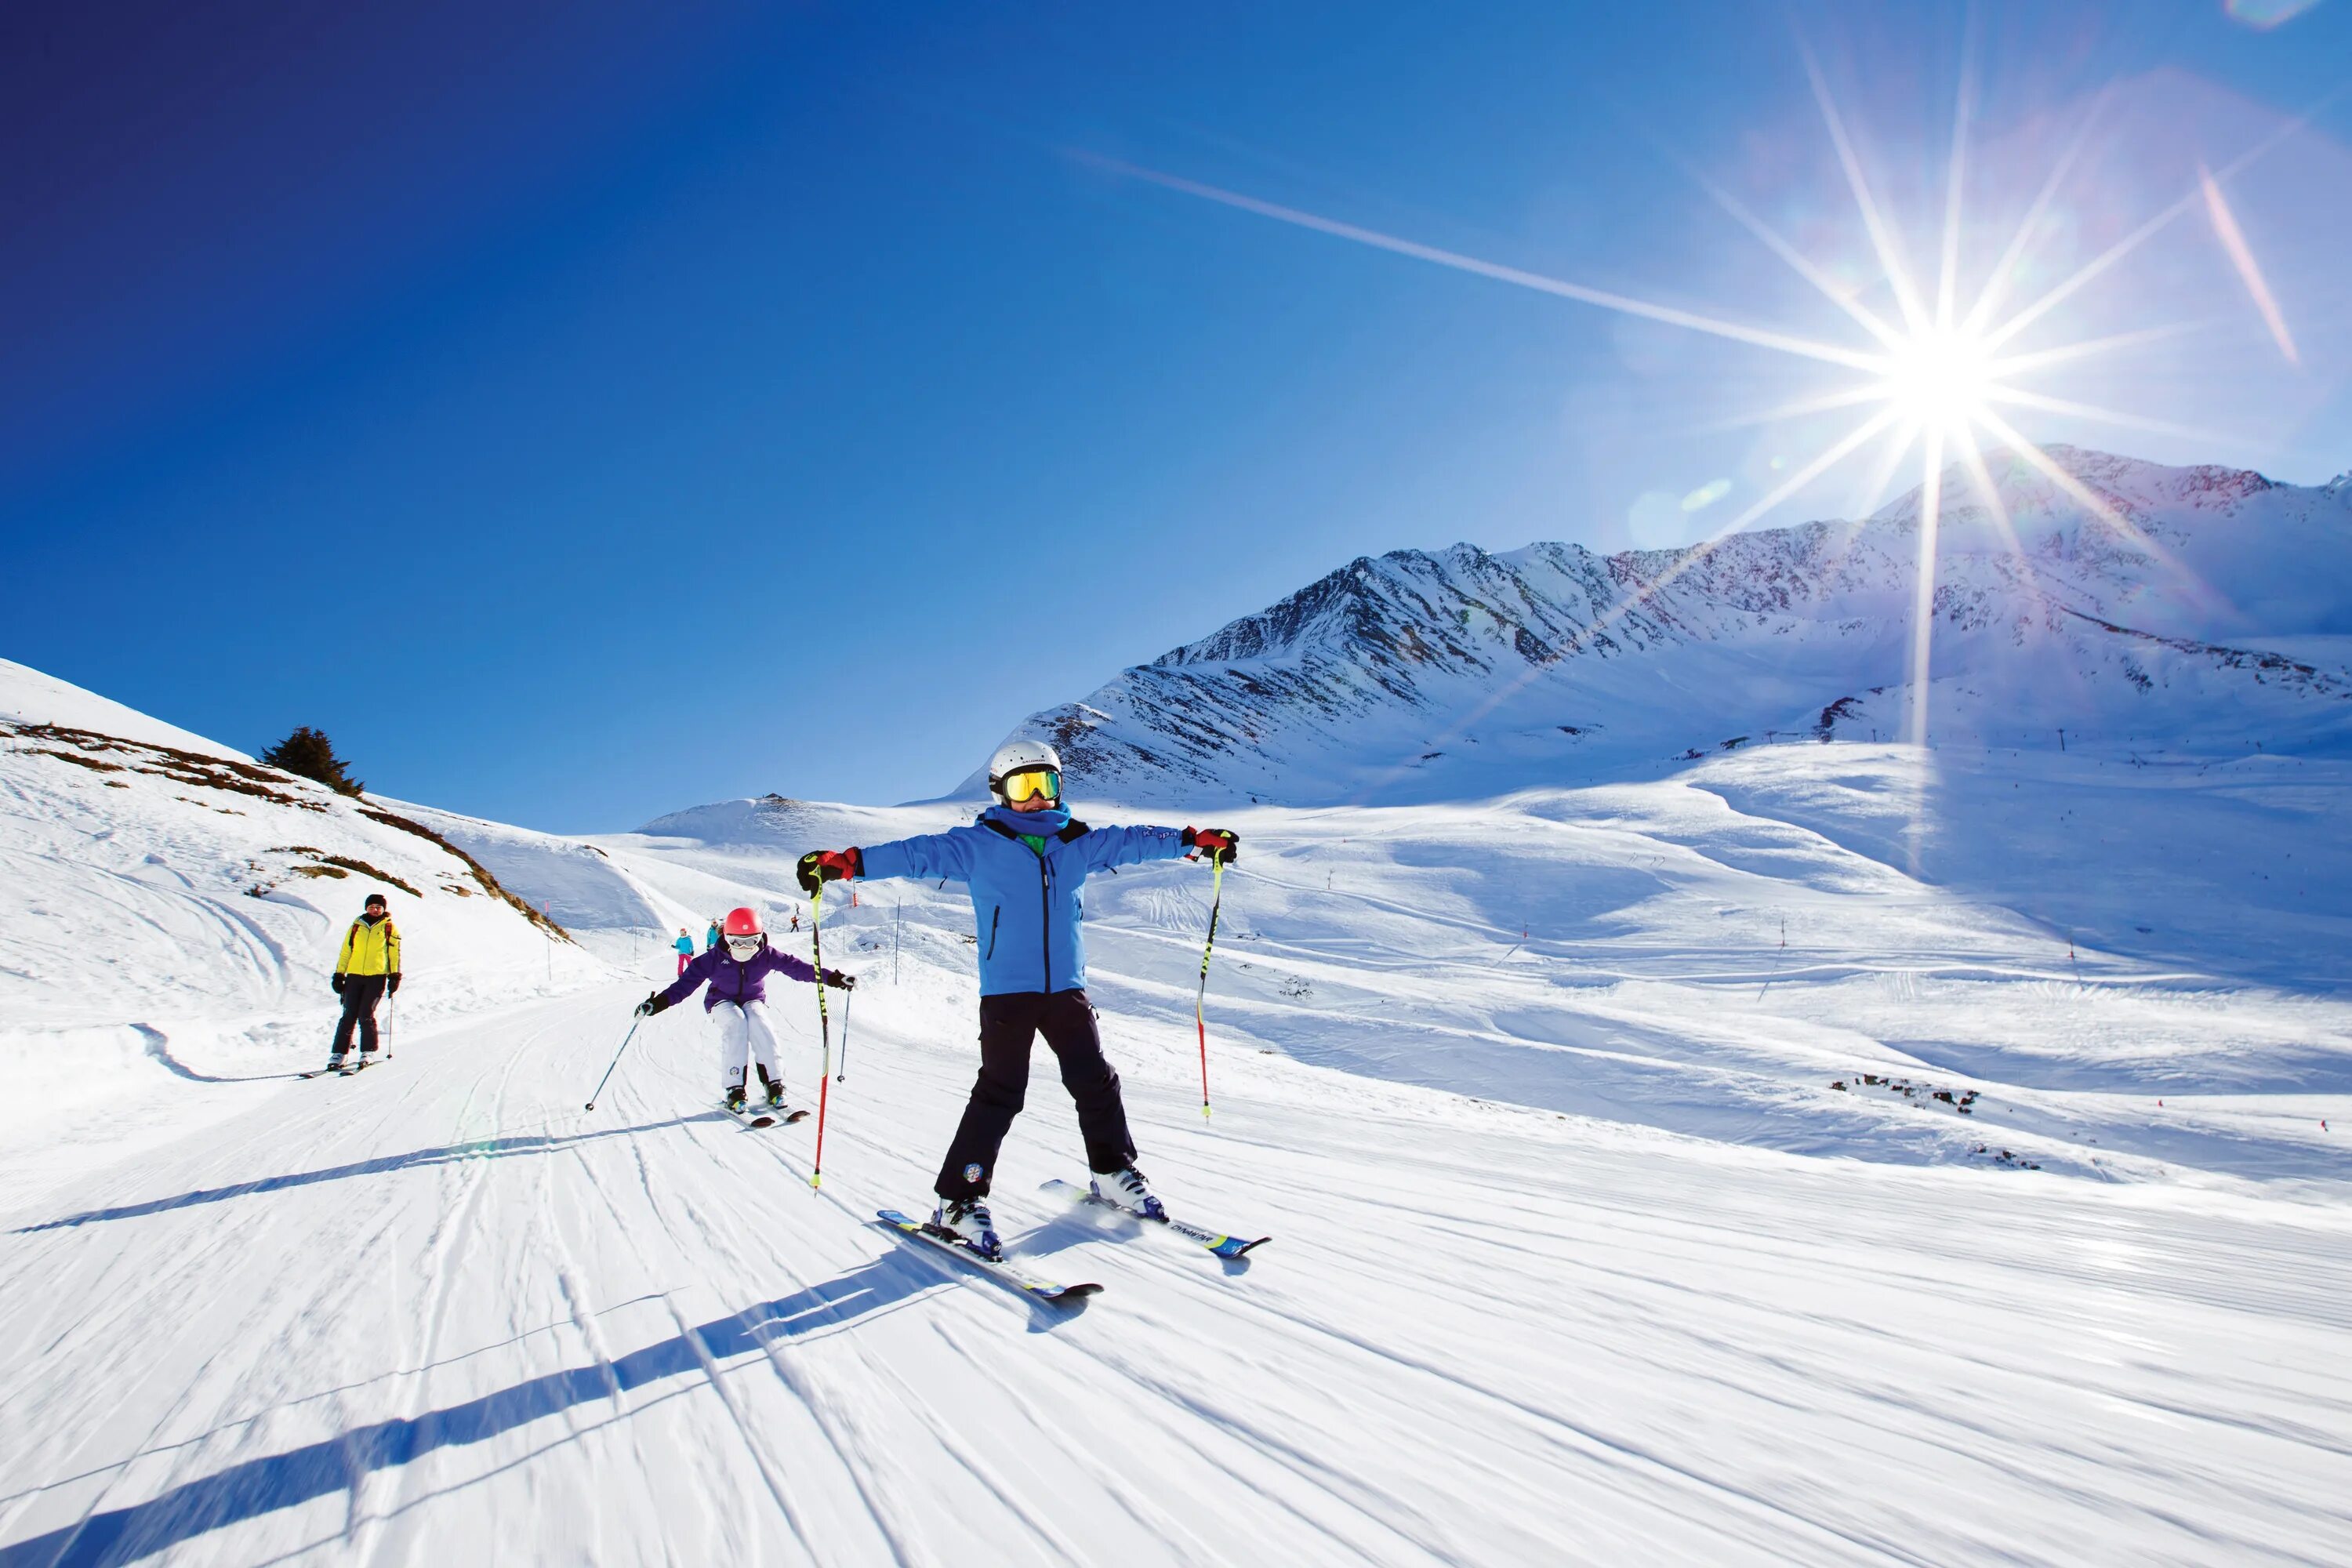 Chamonix Ski Resort. Шамони горнолыжный курорт. Курорт Шамони лыжи. Шамони - Церматт скитур. Выбрать горнолыжный курорт